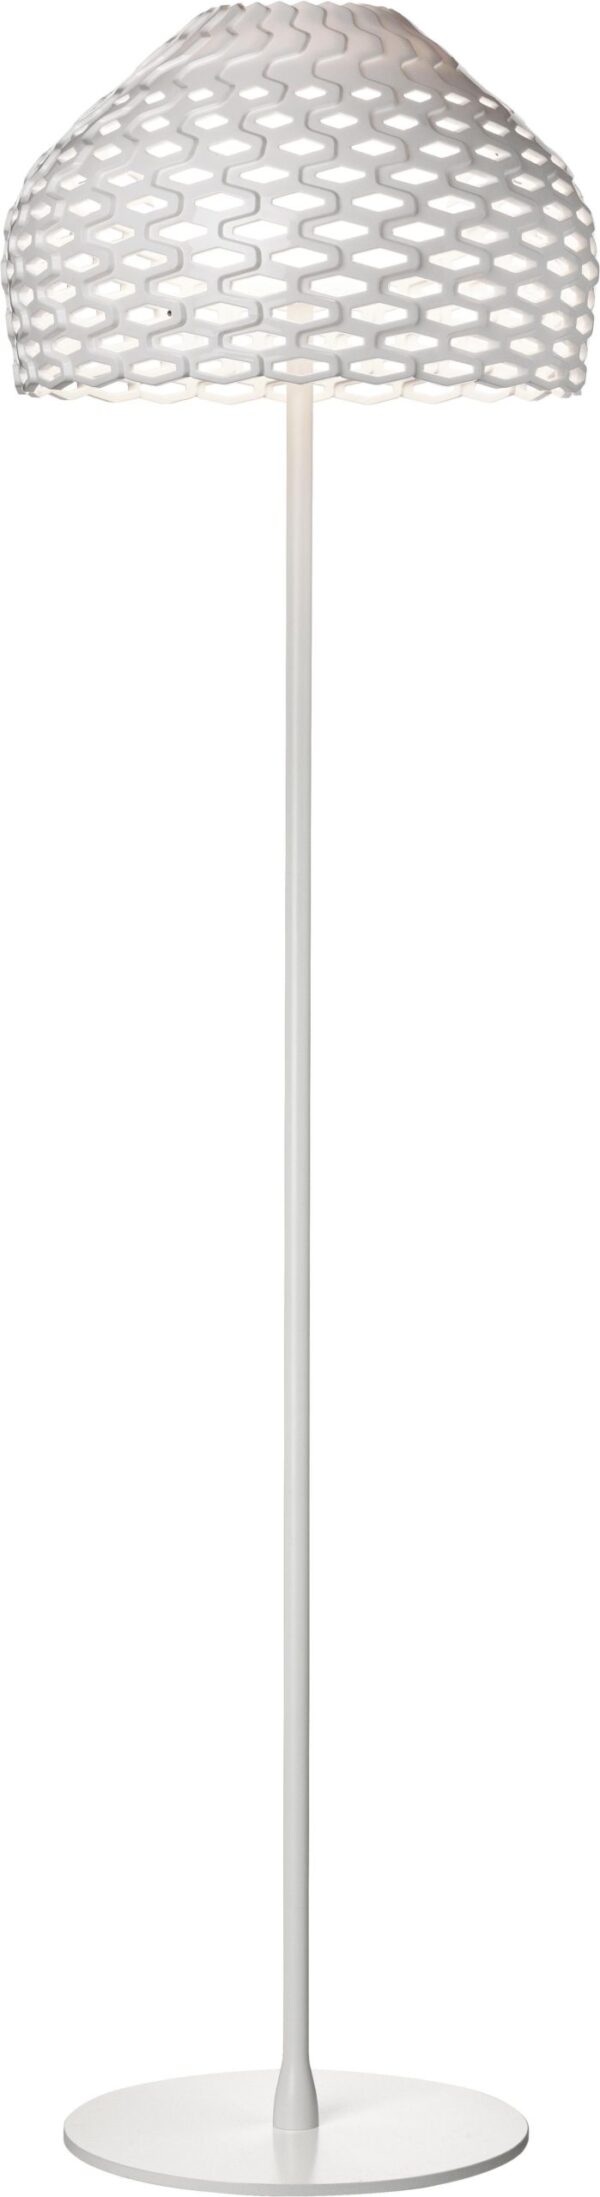 TatouフロアランプF-H 180 cmホワイトフロスパトリシアウルキオラ